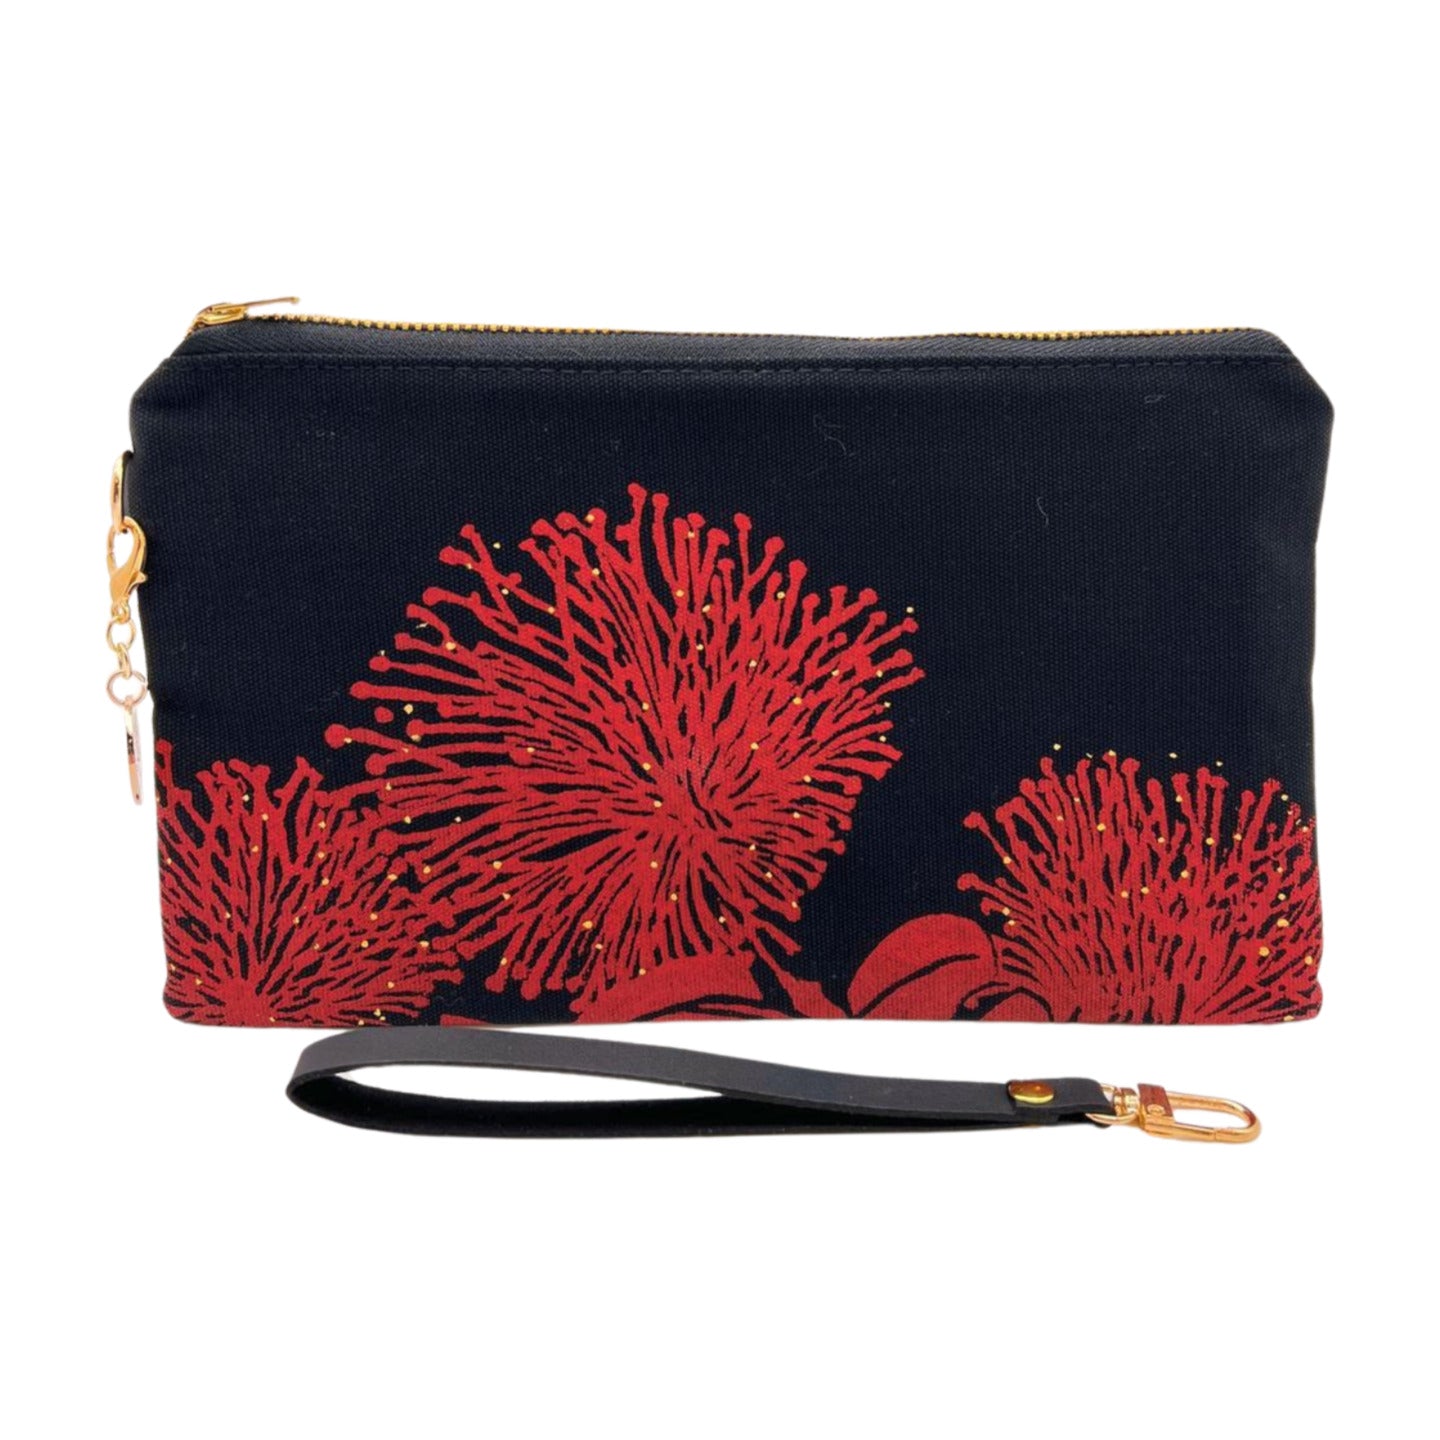 Pop-Up Mākeke - A Maui Day Original Handbags - Handprinted Small Handbag - Red 'Ohi'a on Black Canvas - Front View - Strap Off